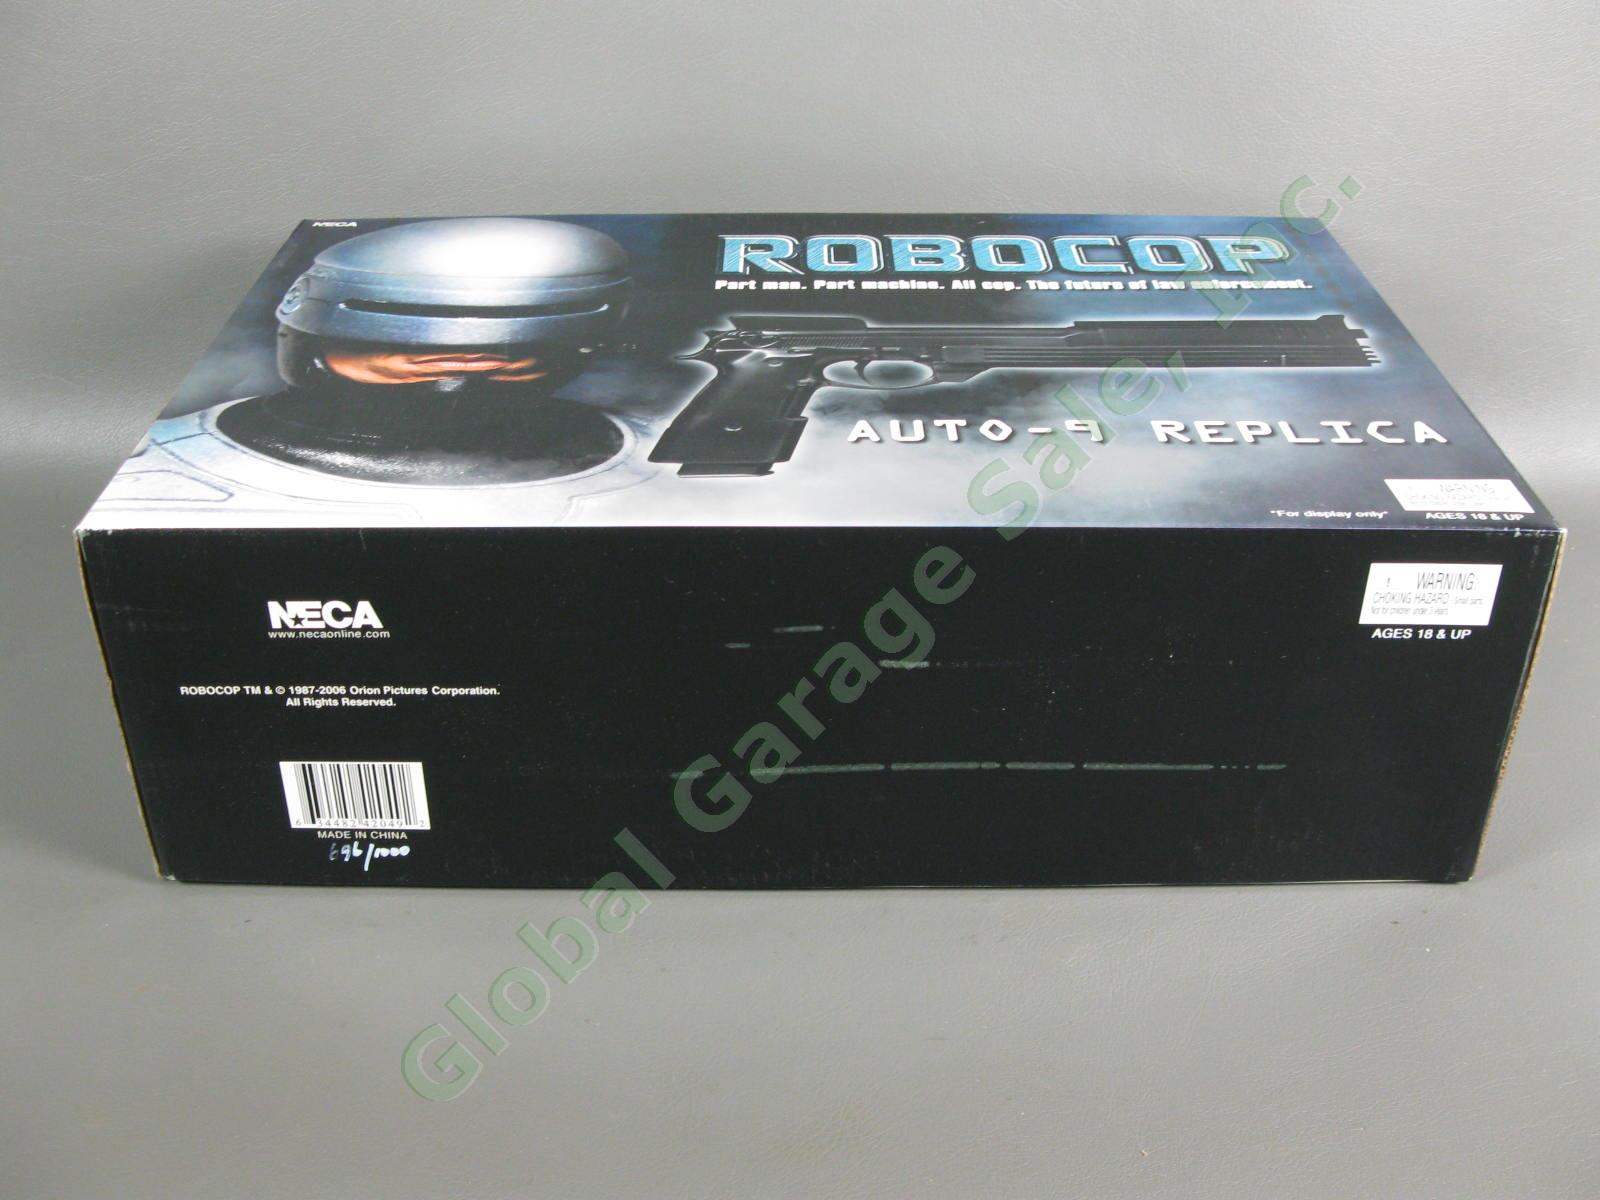 Neca ROBOCOP Beretta M93R Auto-9 Resin Gun Replica Prop Limited Edition 696/1000 2